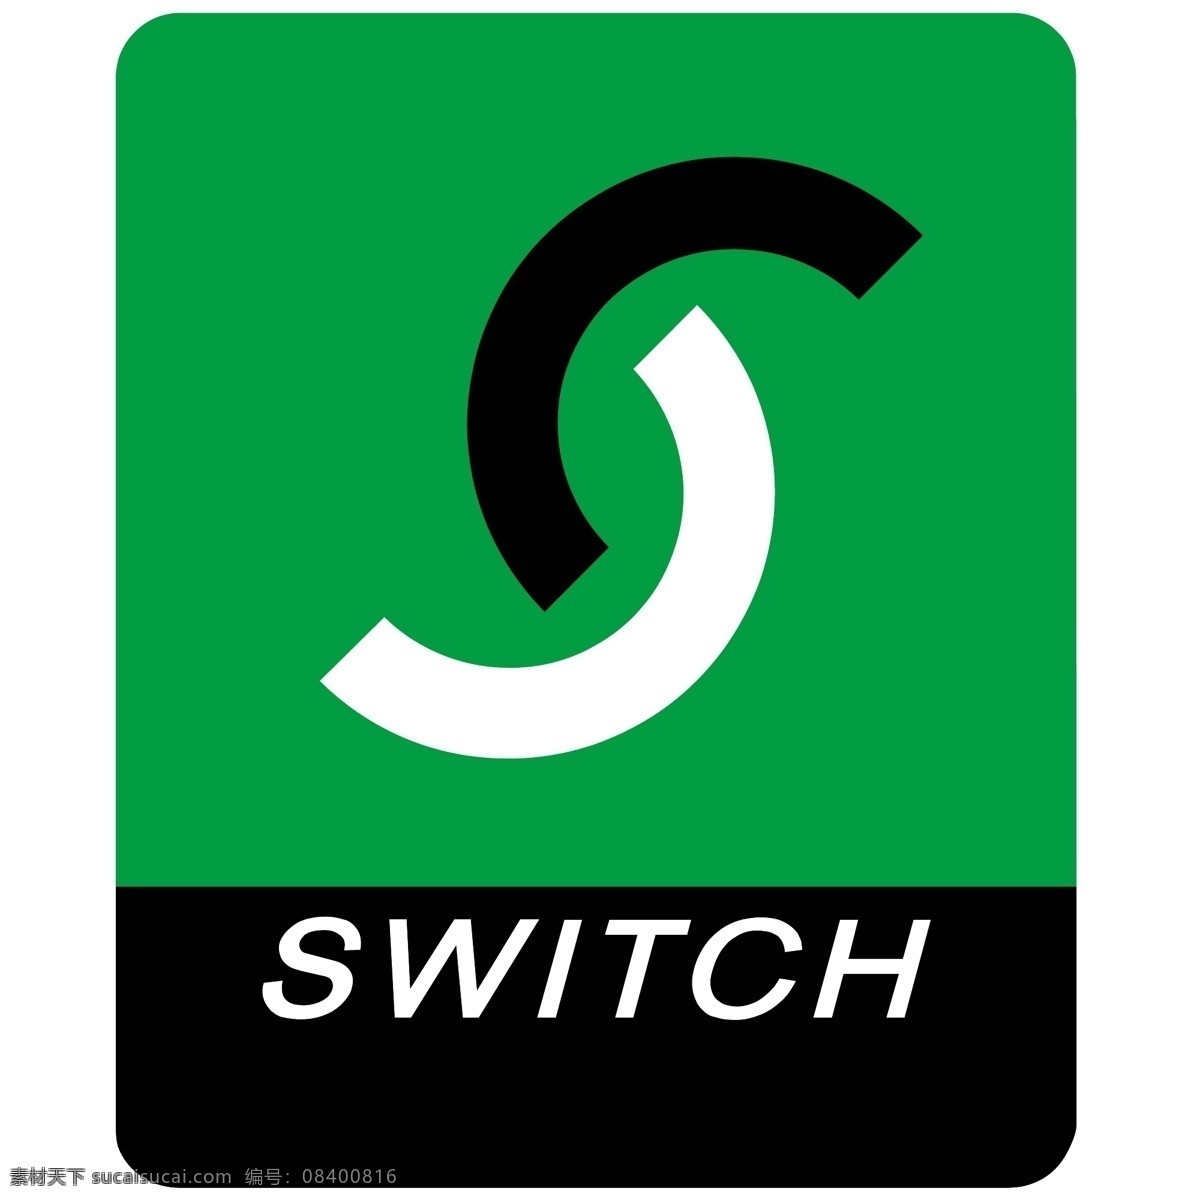 switch 外国 银行 logo 标识设计 银行logo 图形设计 白色